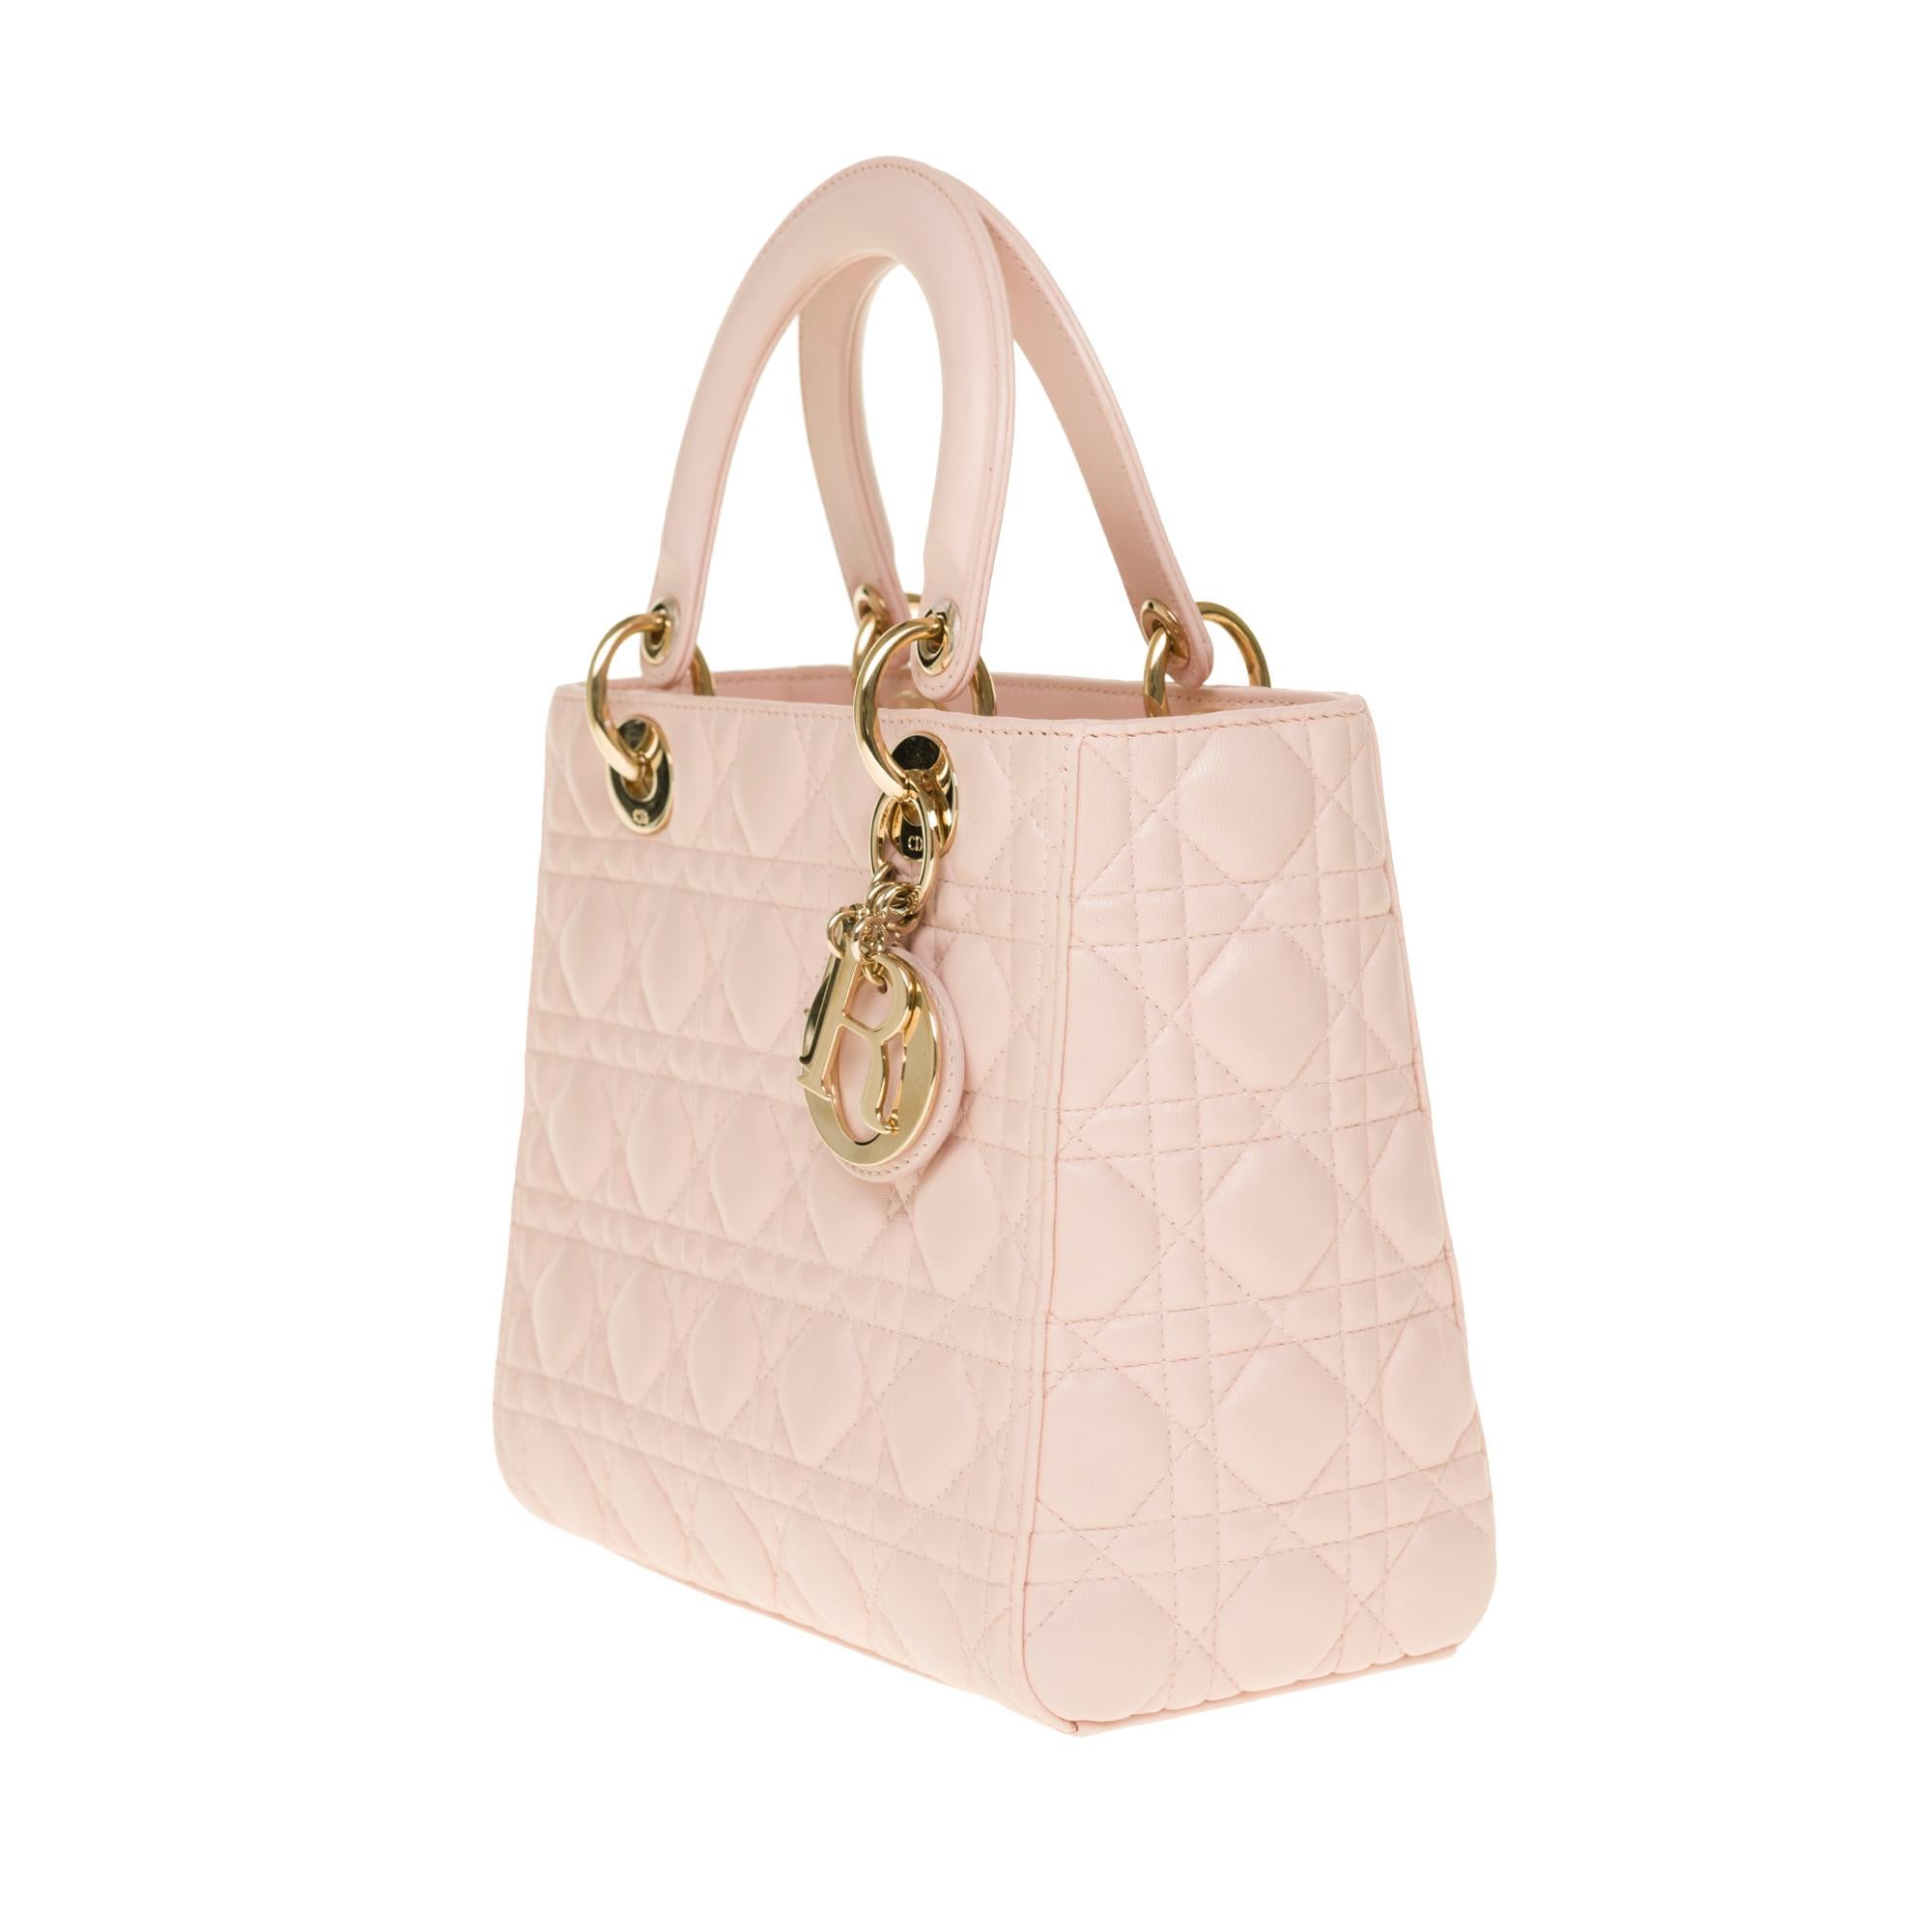 White  Christian Dior Lady Dior Medium size handbag in Baby Pink cannage leather, CHW